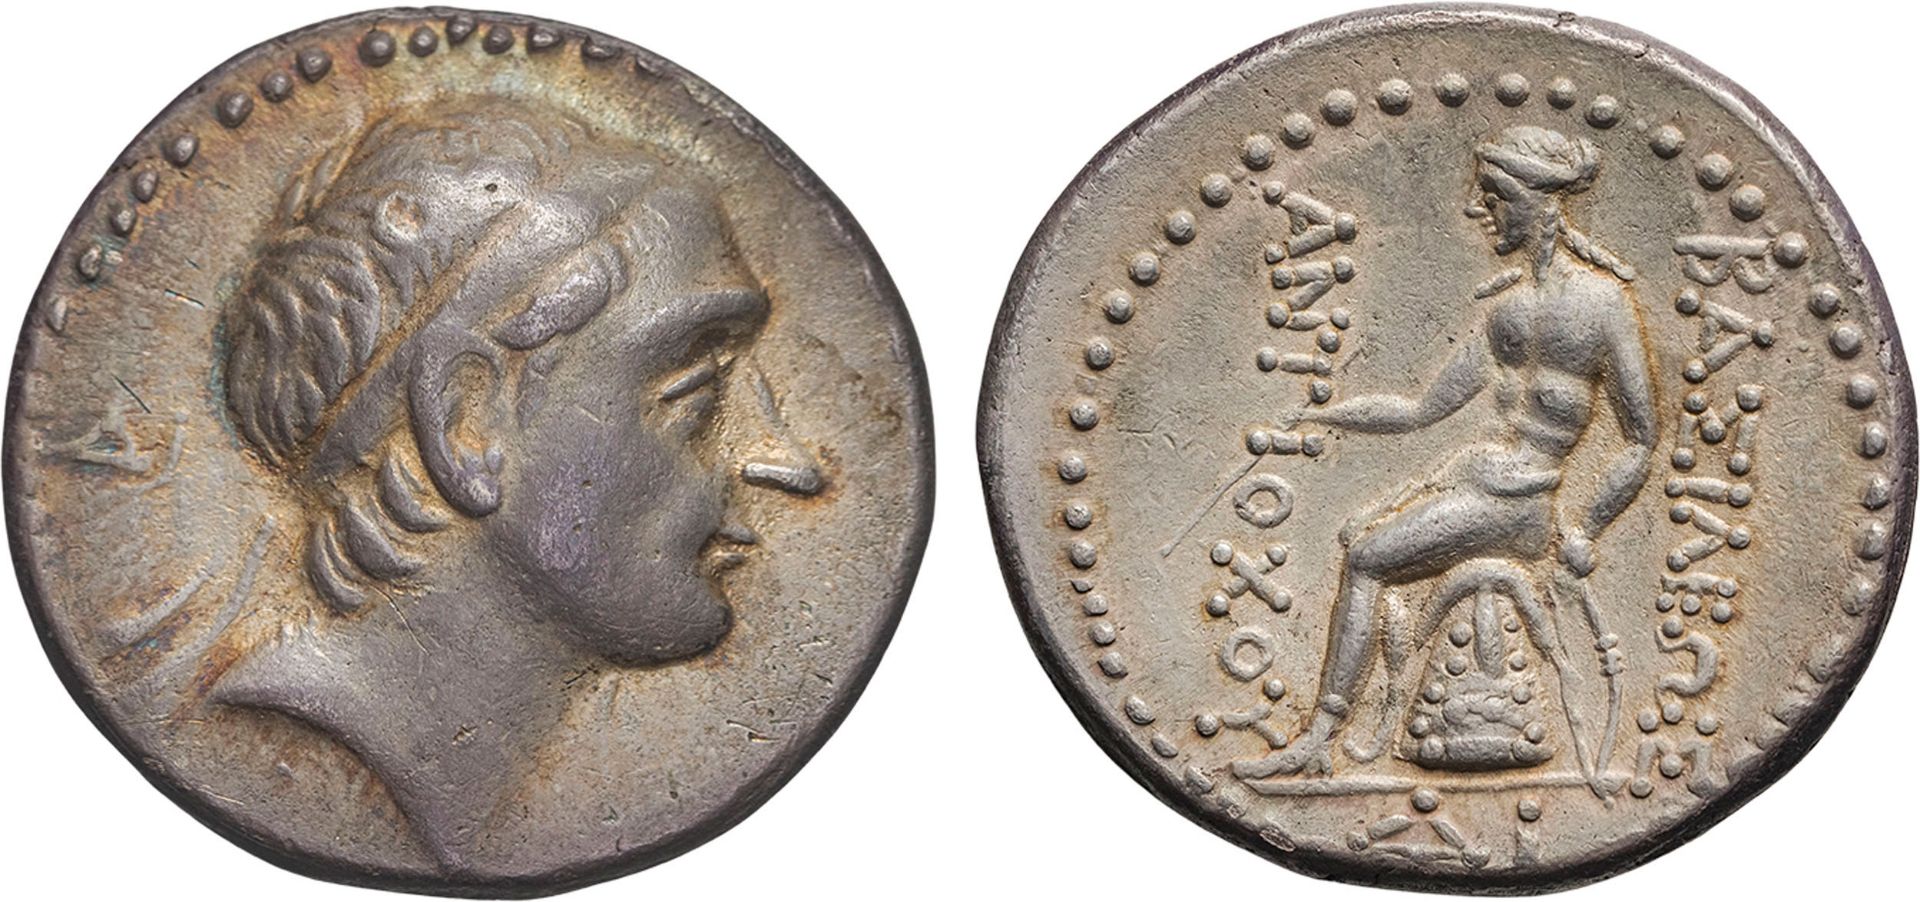 MONETE GRECHE. RE SELEUCIDI. ANTIOCO III (223-187 A.C.). TETRADRACMA